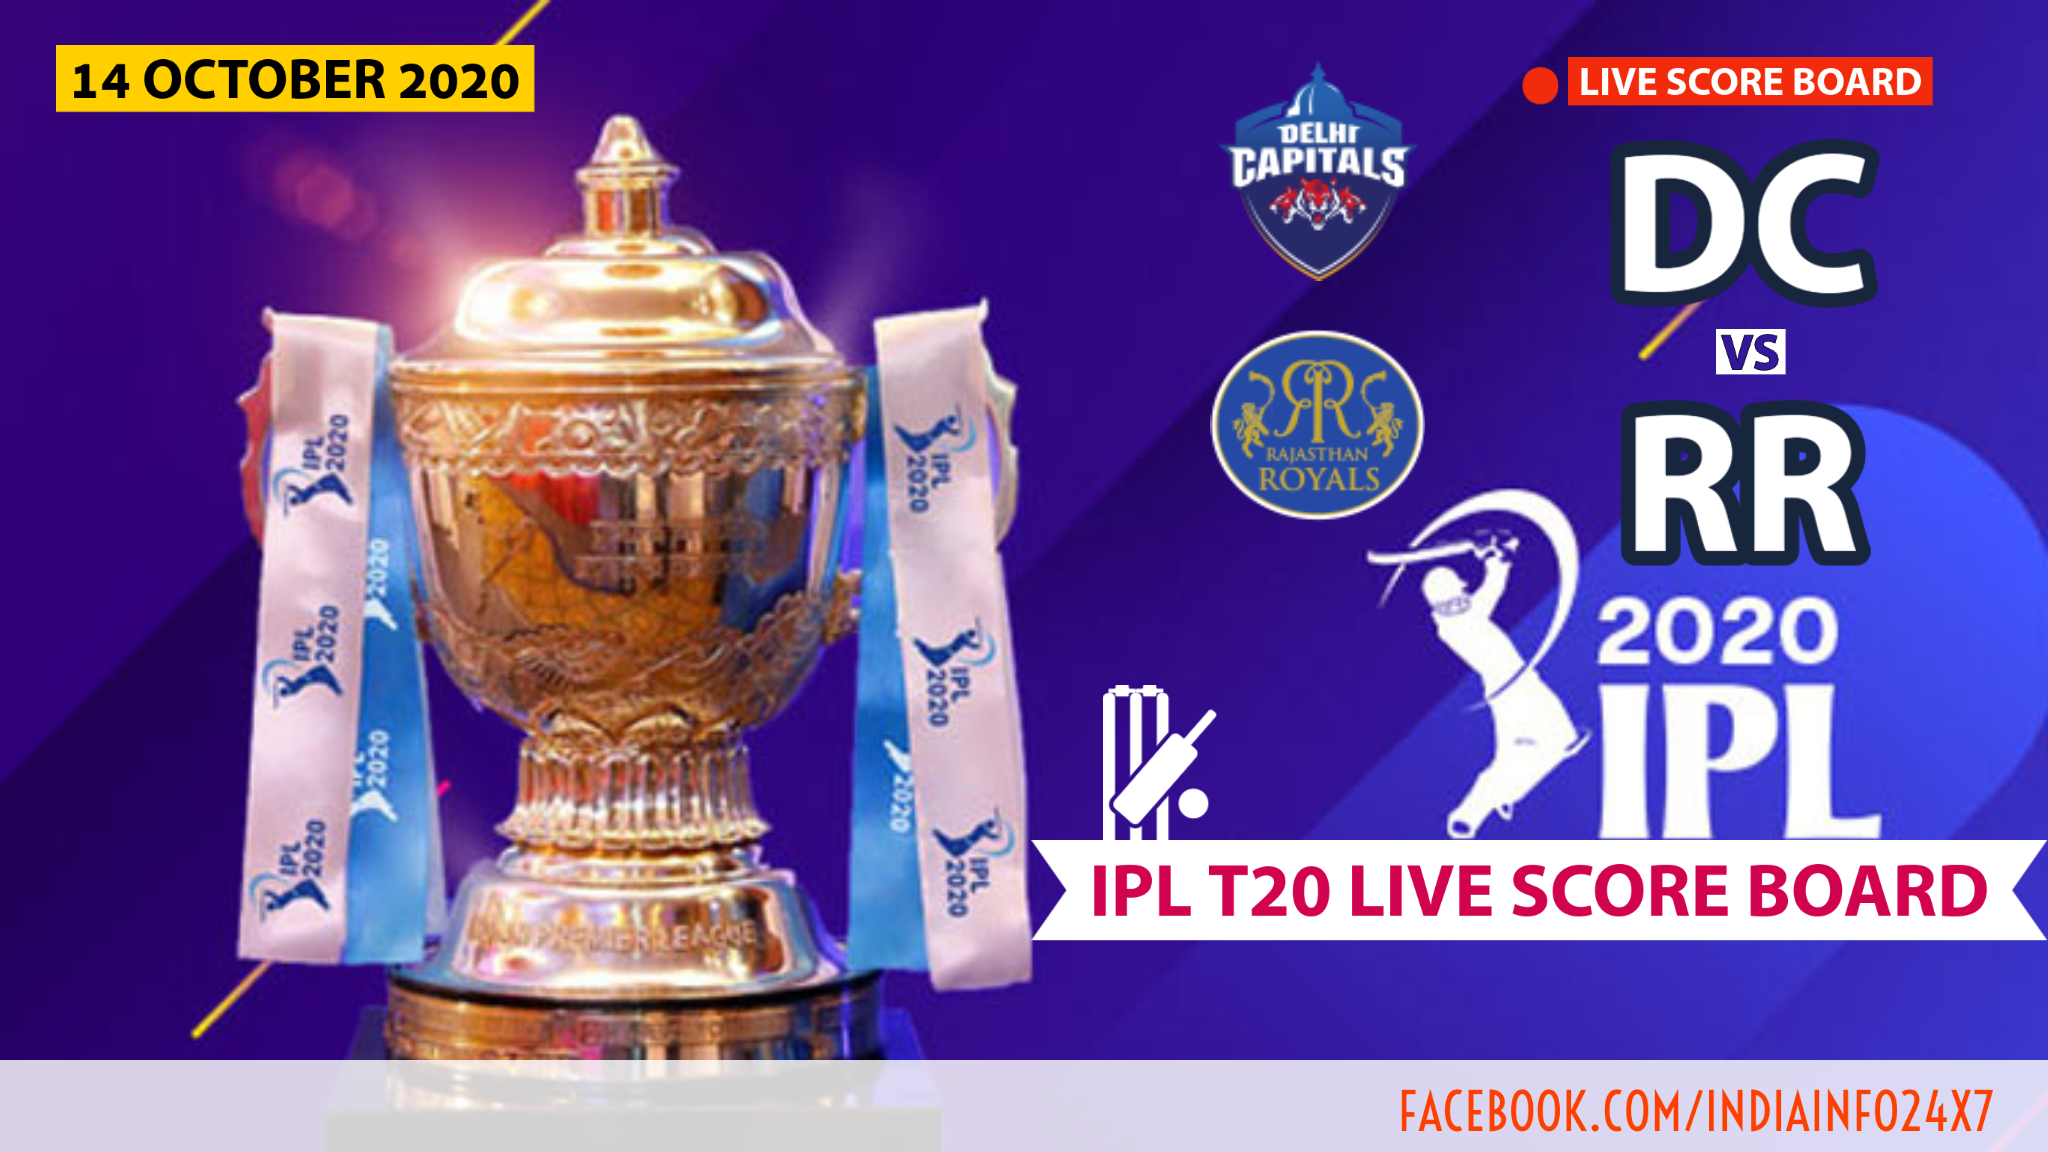 ipl cricket live score board today Match 30 DC vs RR Who will win